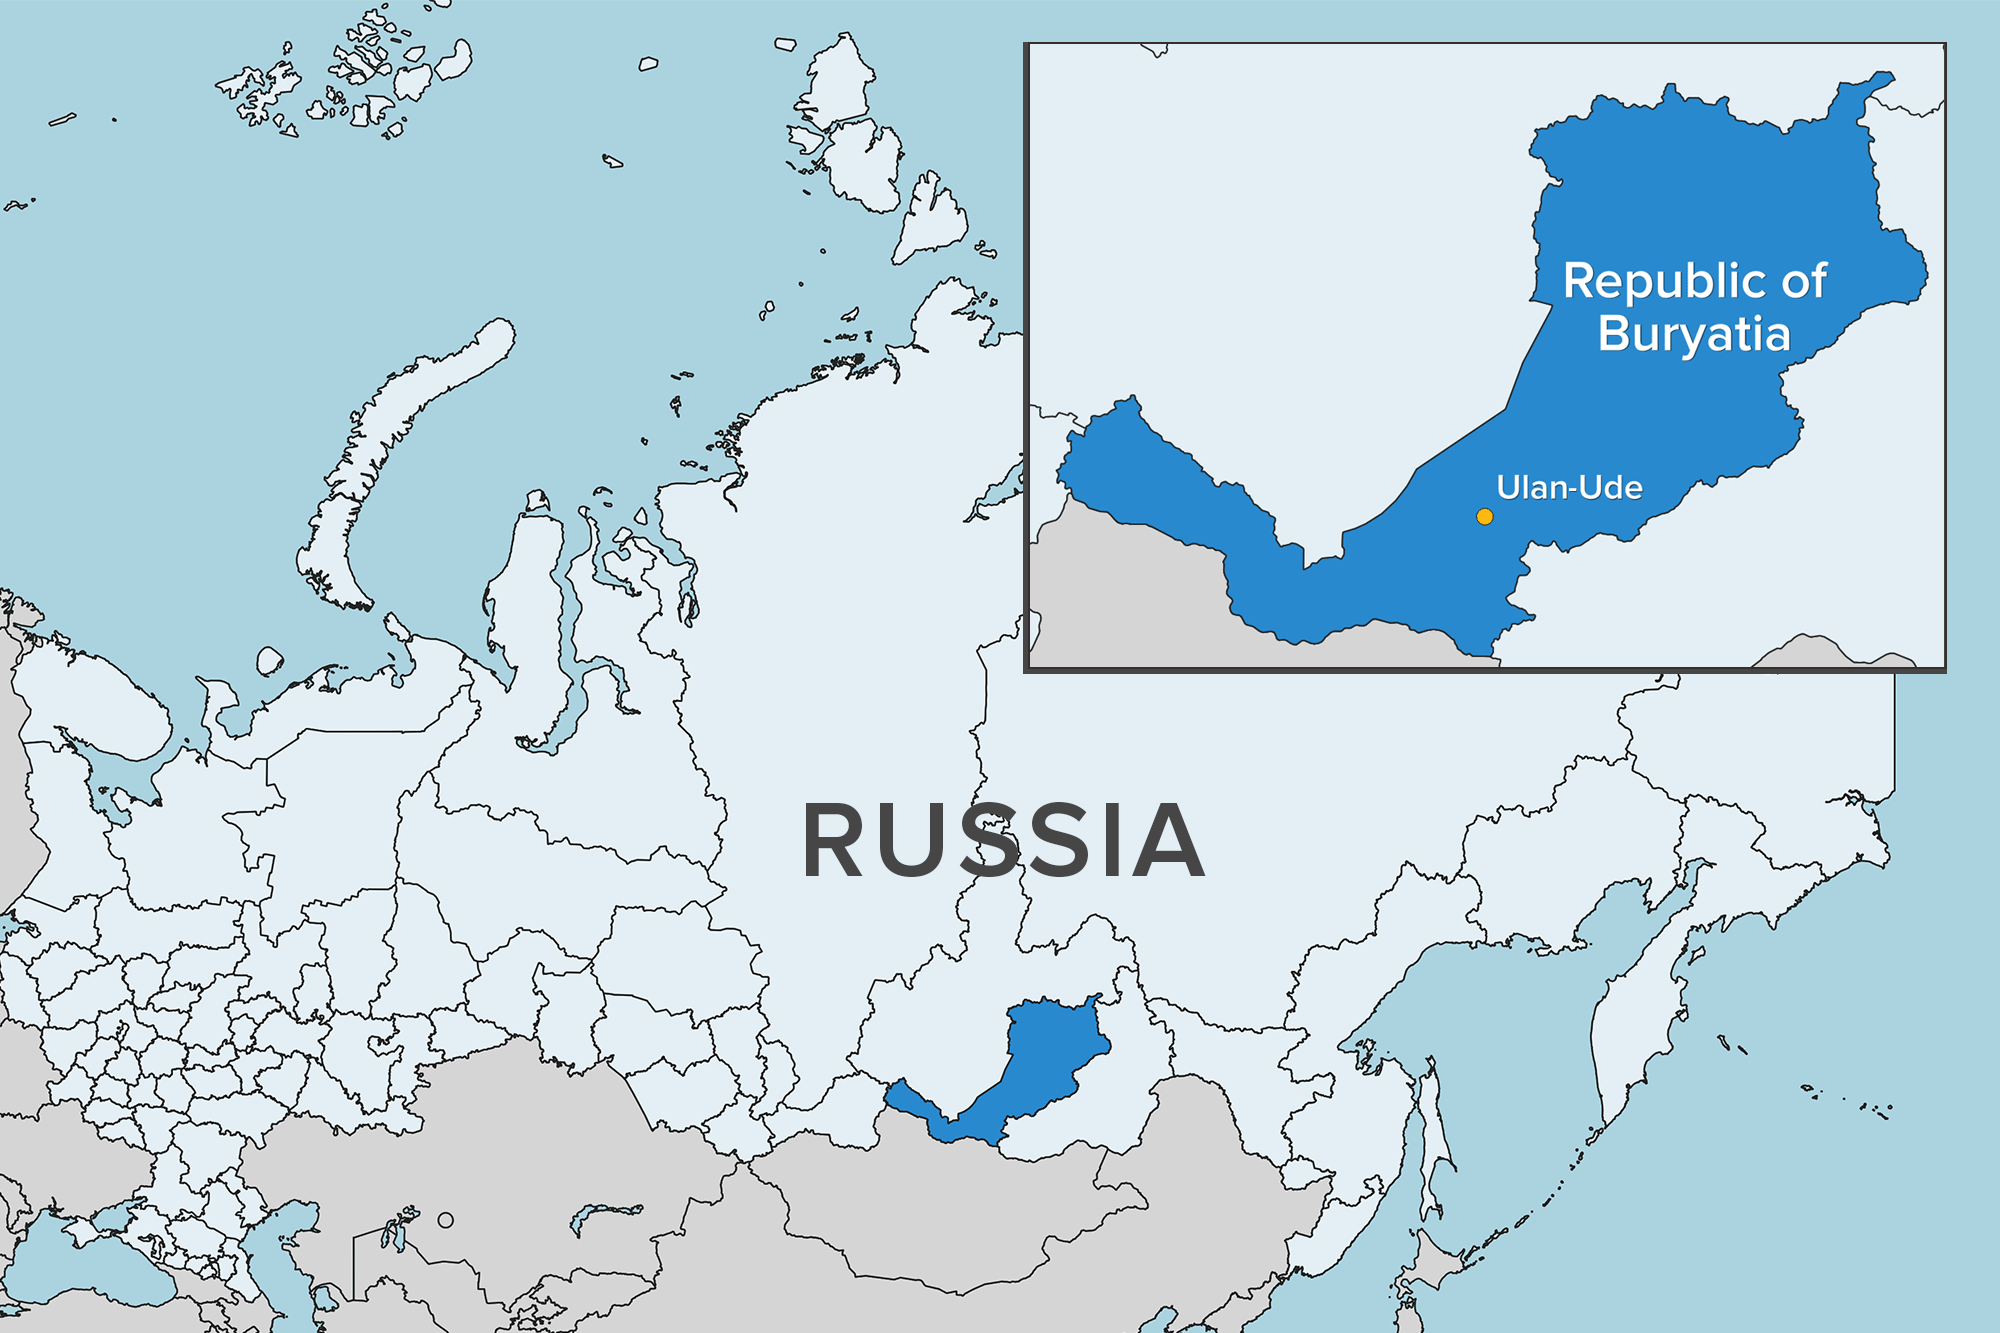 Map of the Republic of Buryatia